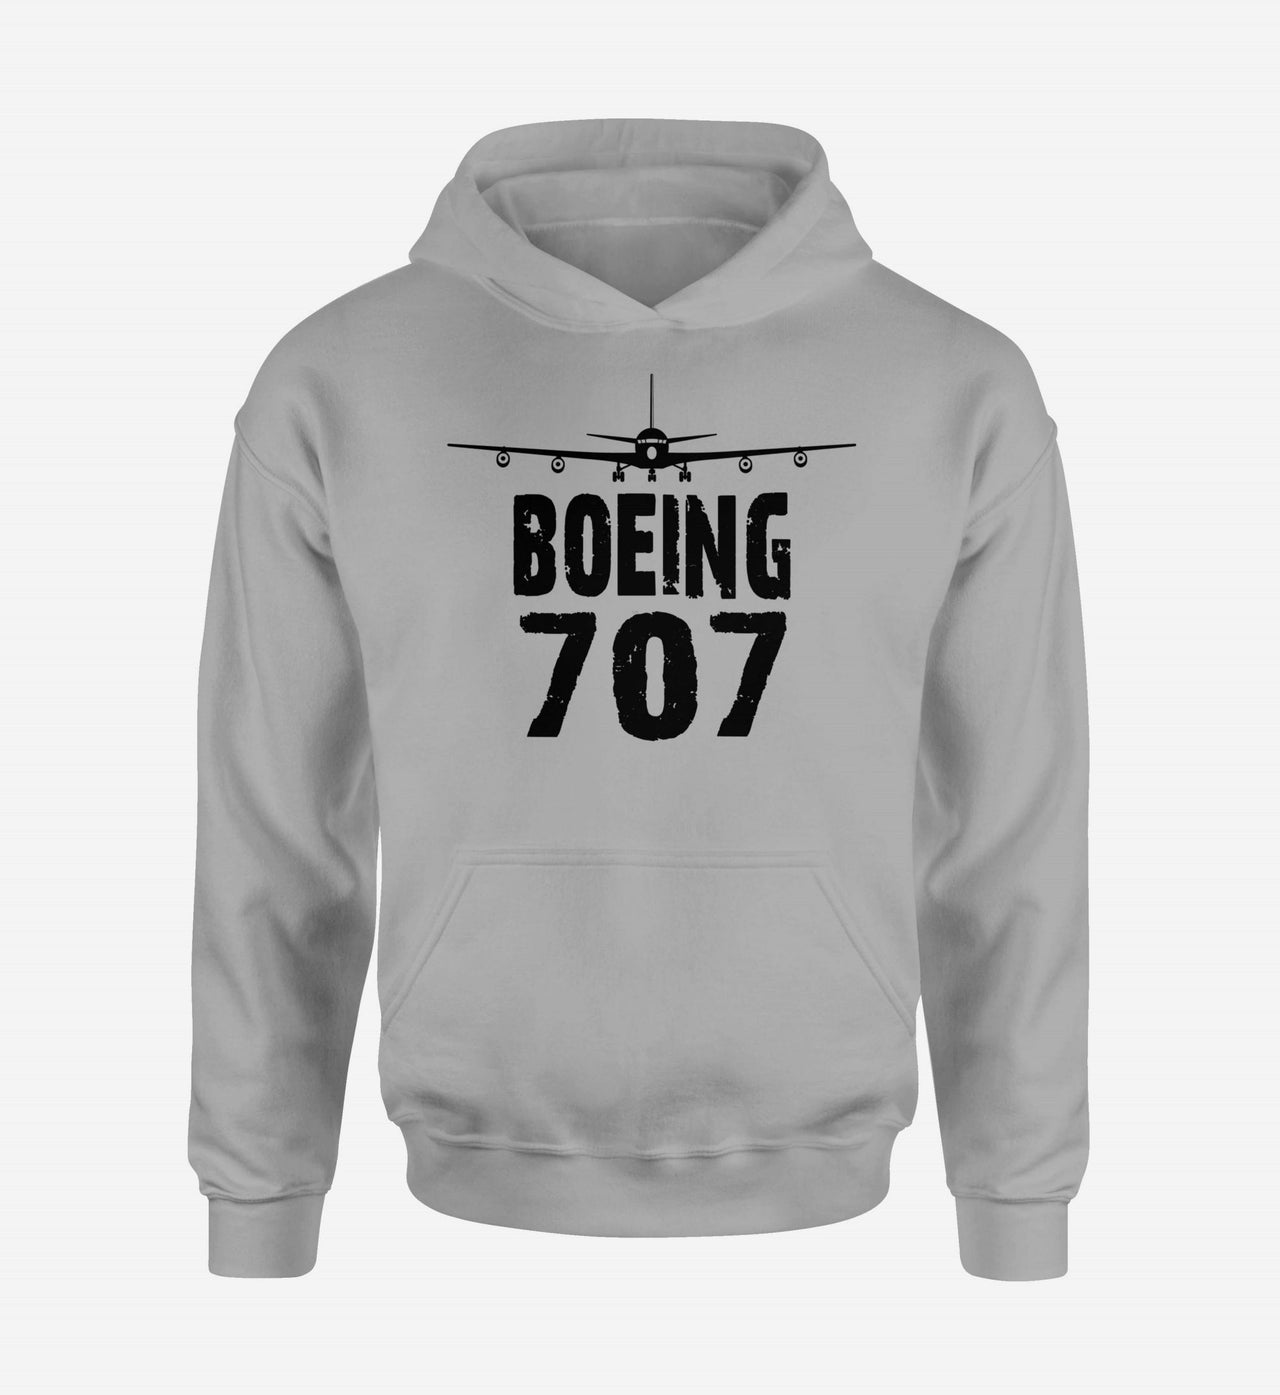 Boeing 707 & Plane Designed Hoodies